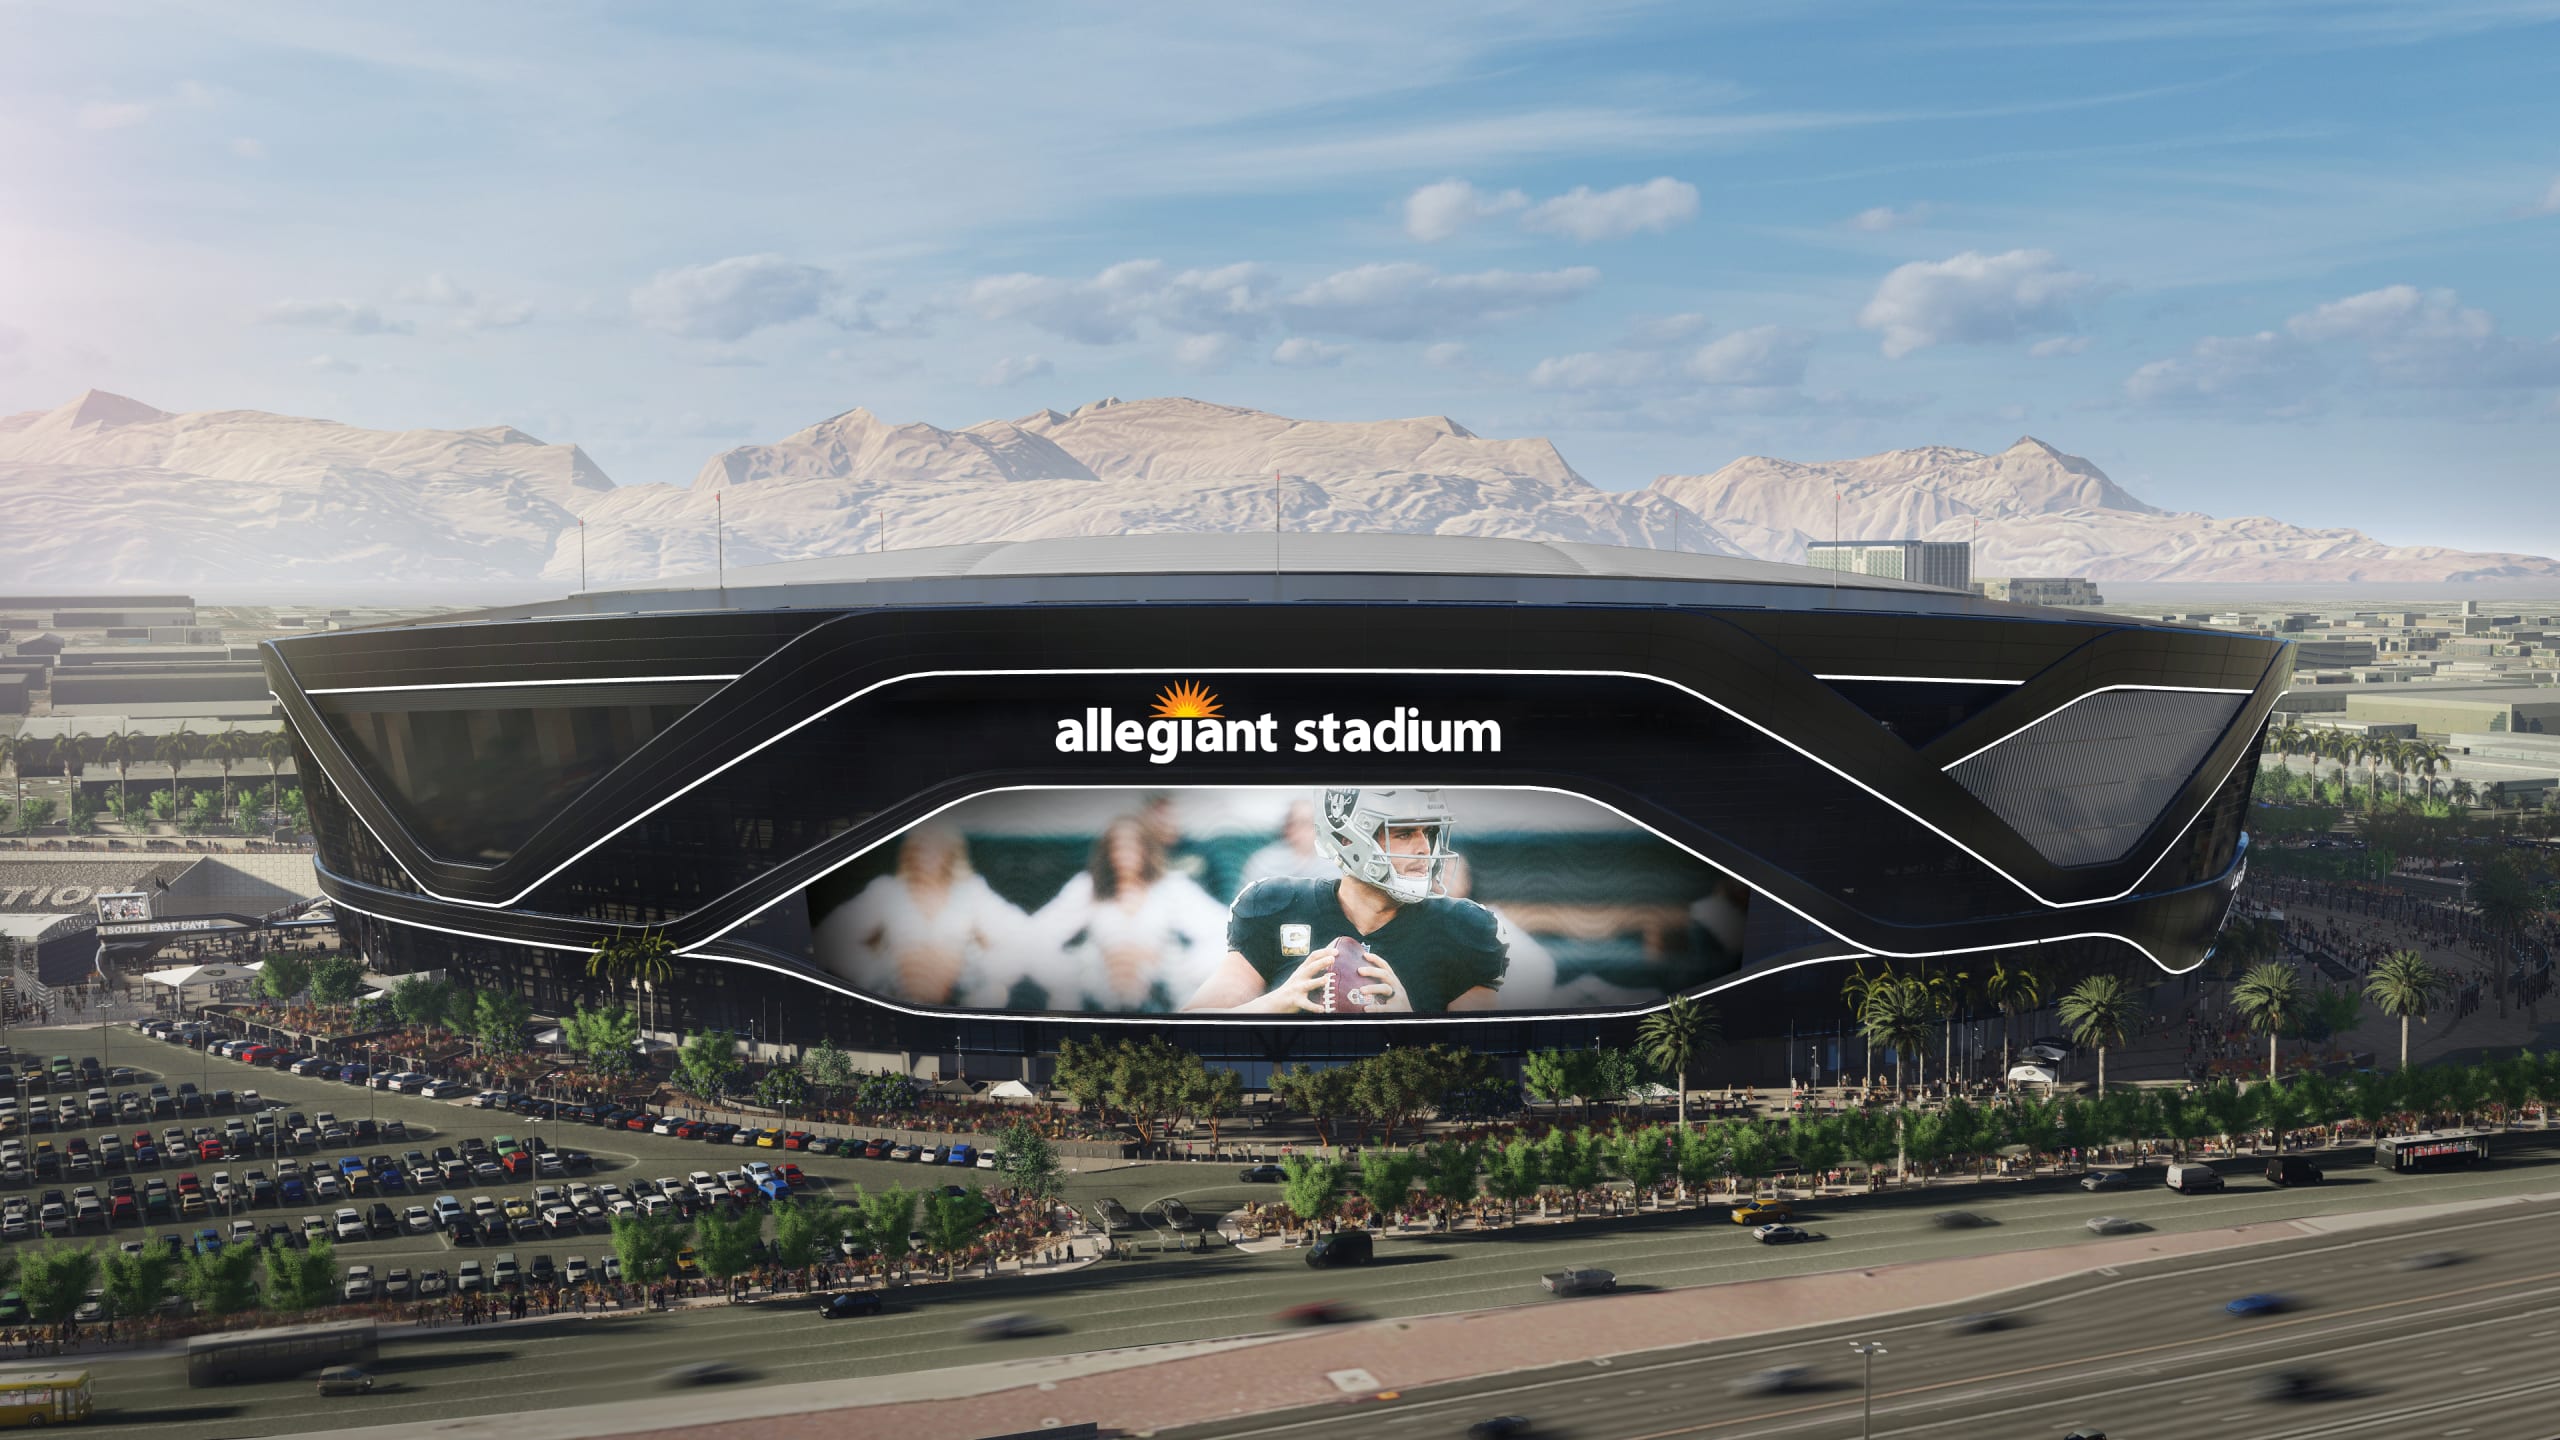 Las Vegas Raiders Stadium Virtual Seating Chart